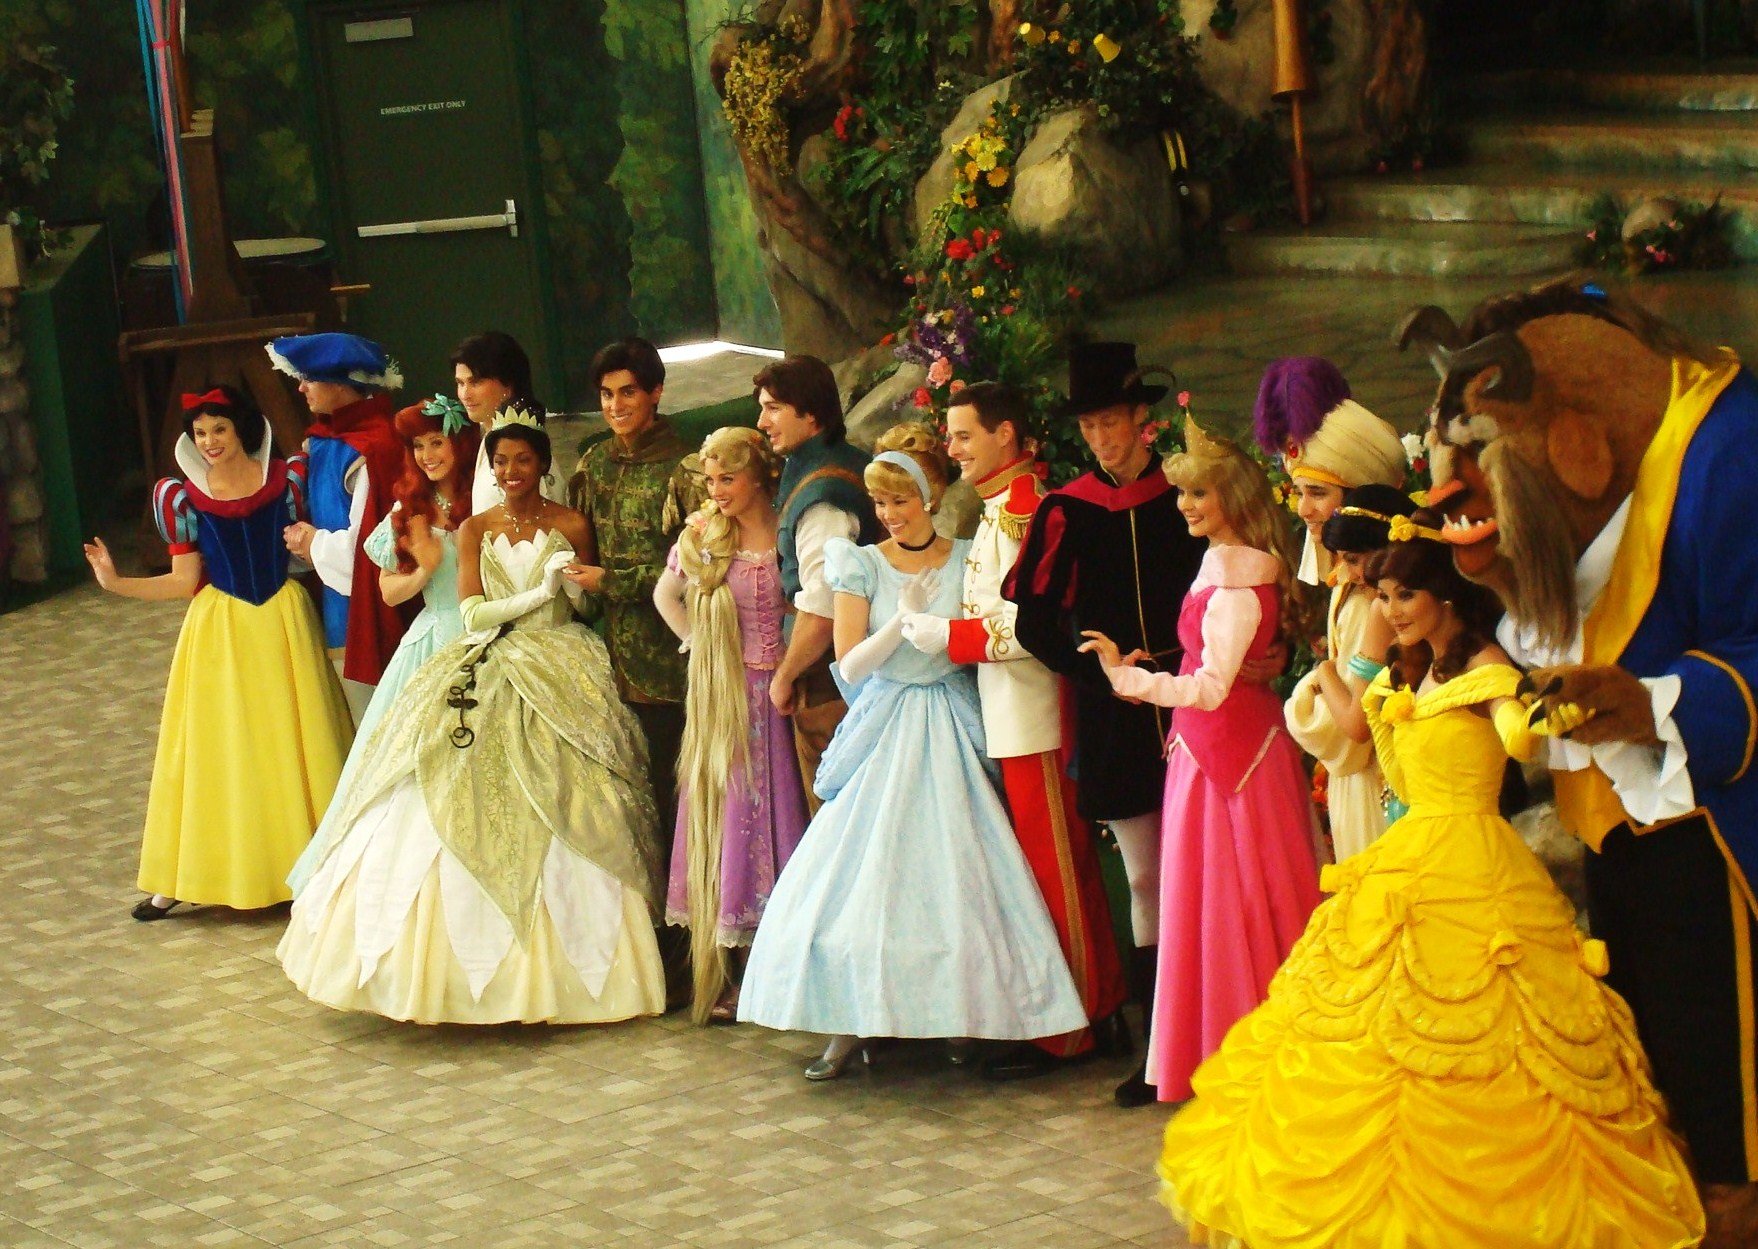 Disney Princesses at Disney World | Source: Wikimedia Commons / mydisneyadventures, Disneyland 2012-02-14 Princess and Princesses a, CC BY 2.0